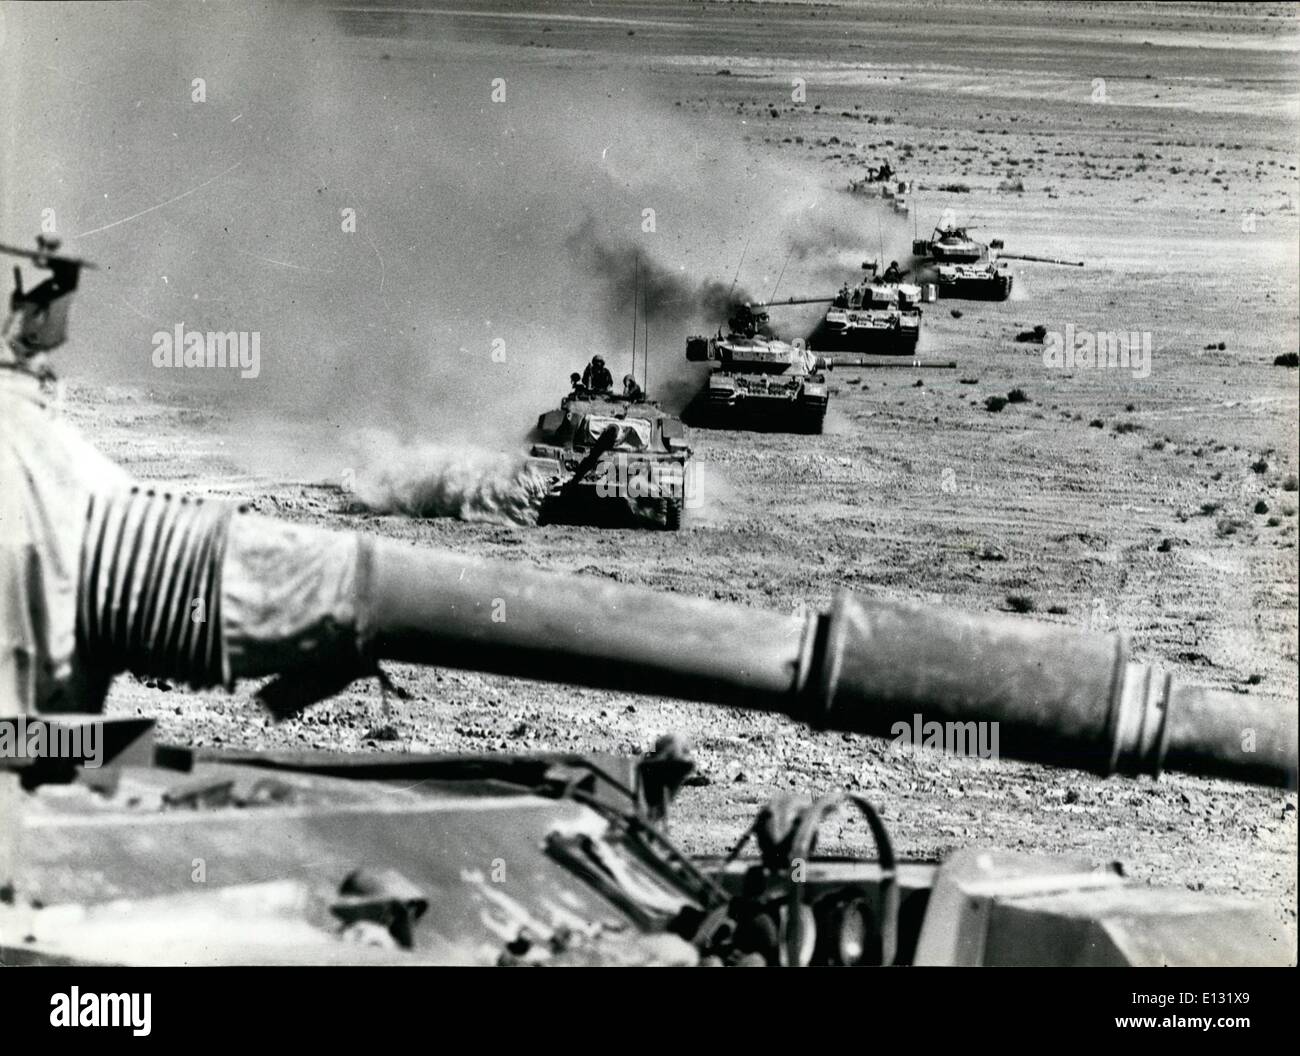 Feb. 26, 2012 - Israeli centurion tanks - manoeuvres in the sinai desert near mills. Stock Photo